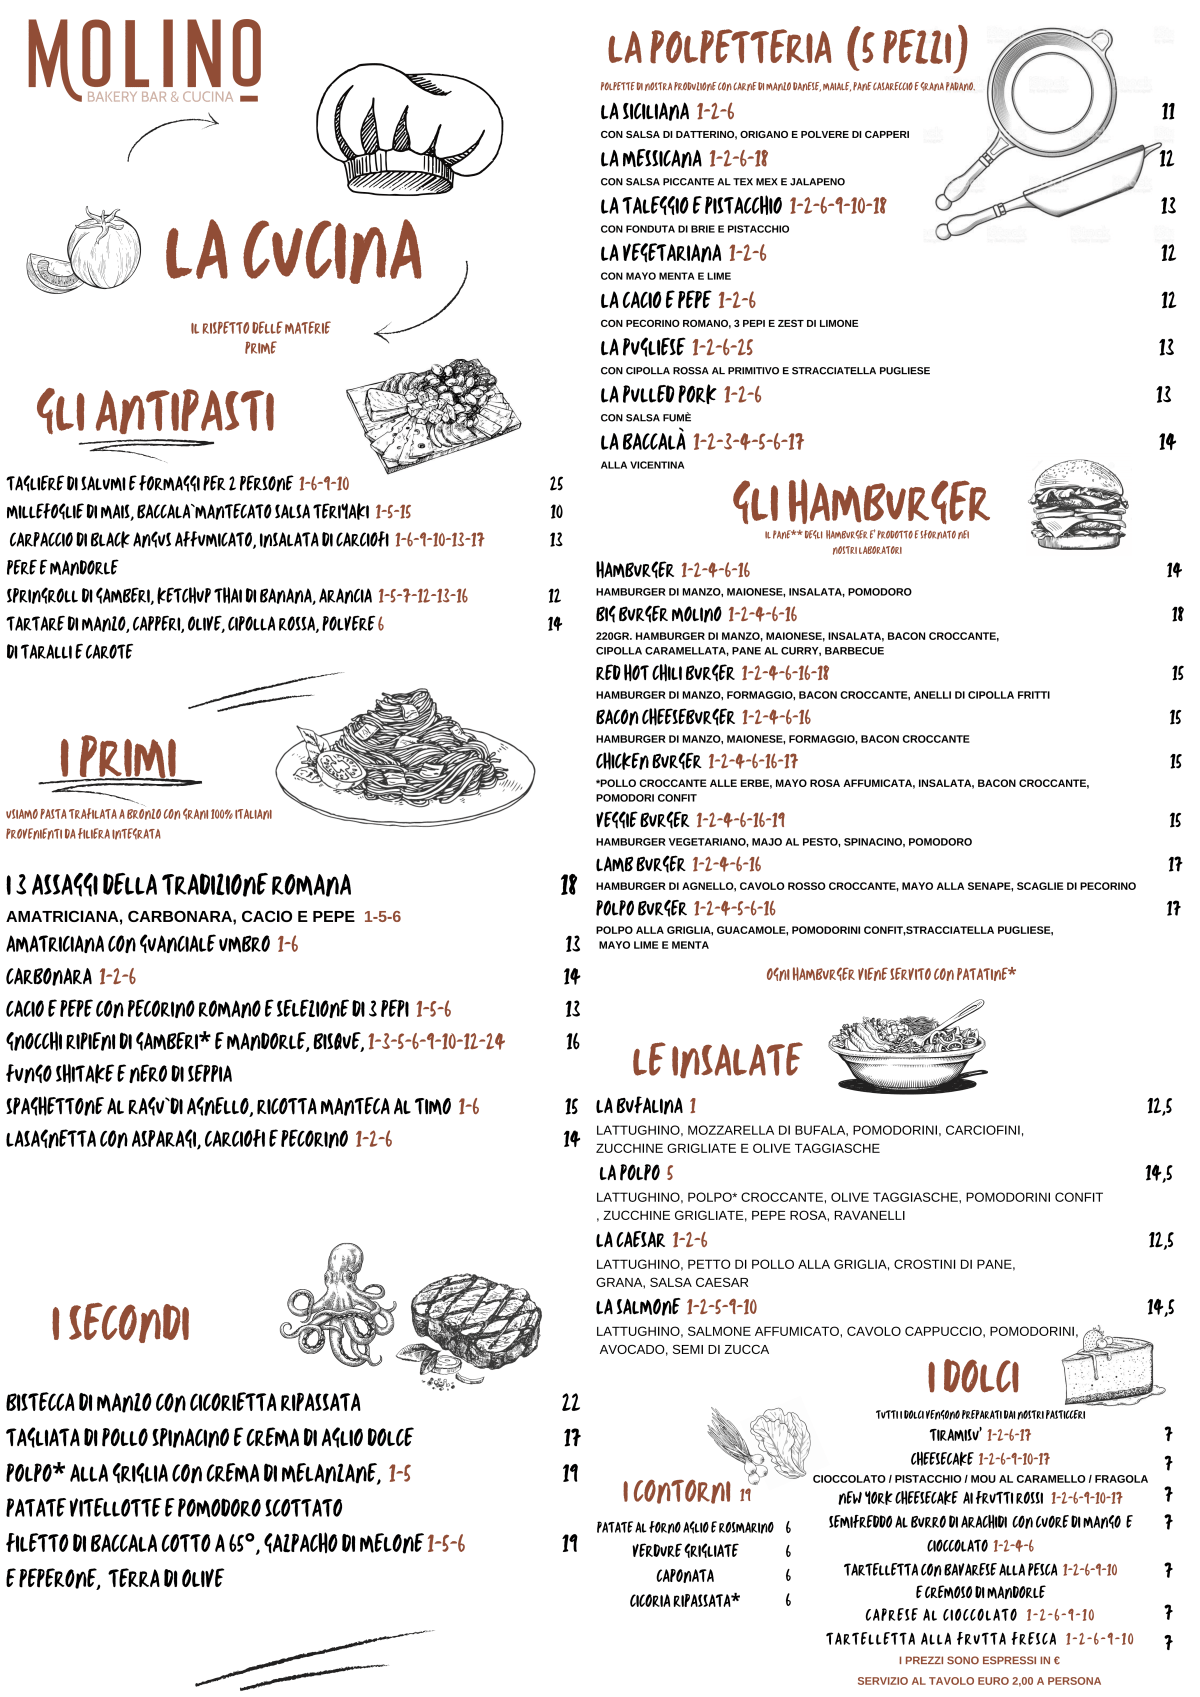 Molino via Appia menu